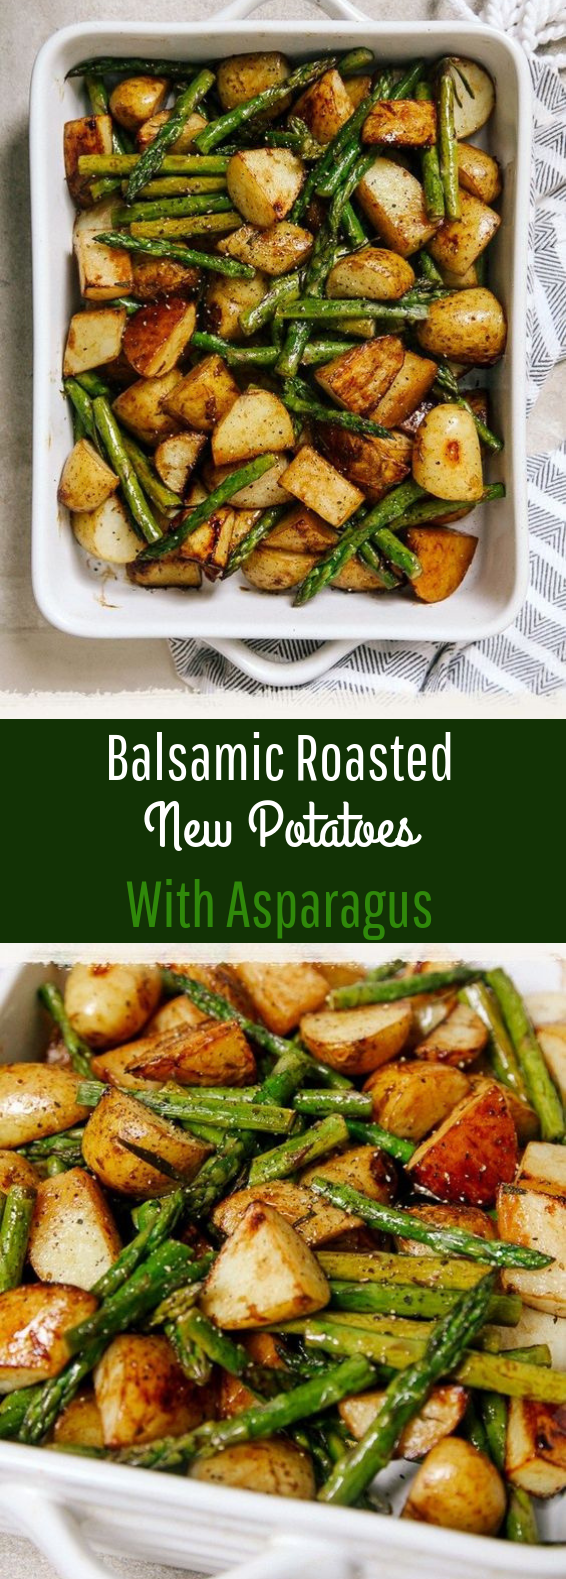 Balsamic Roasted New Potatoes With Asparagus #veggies #vegetarian